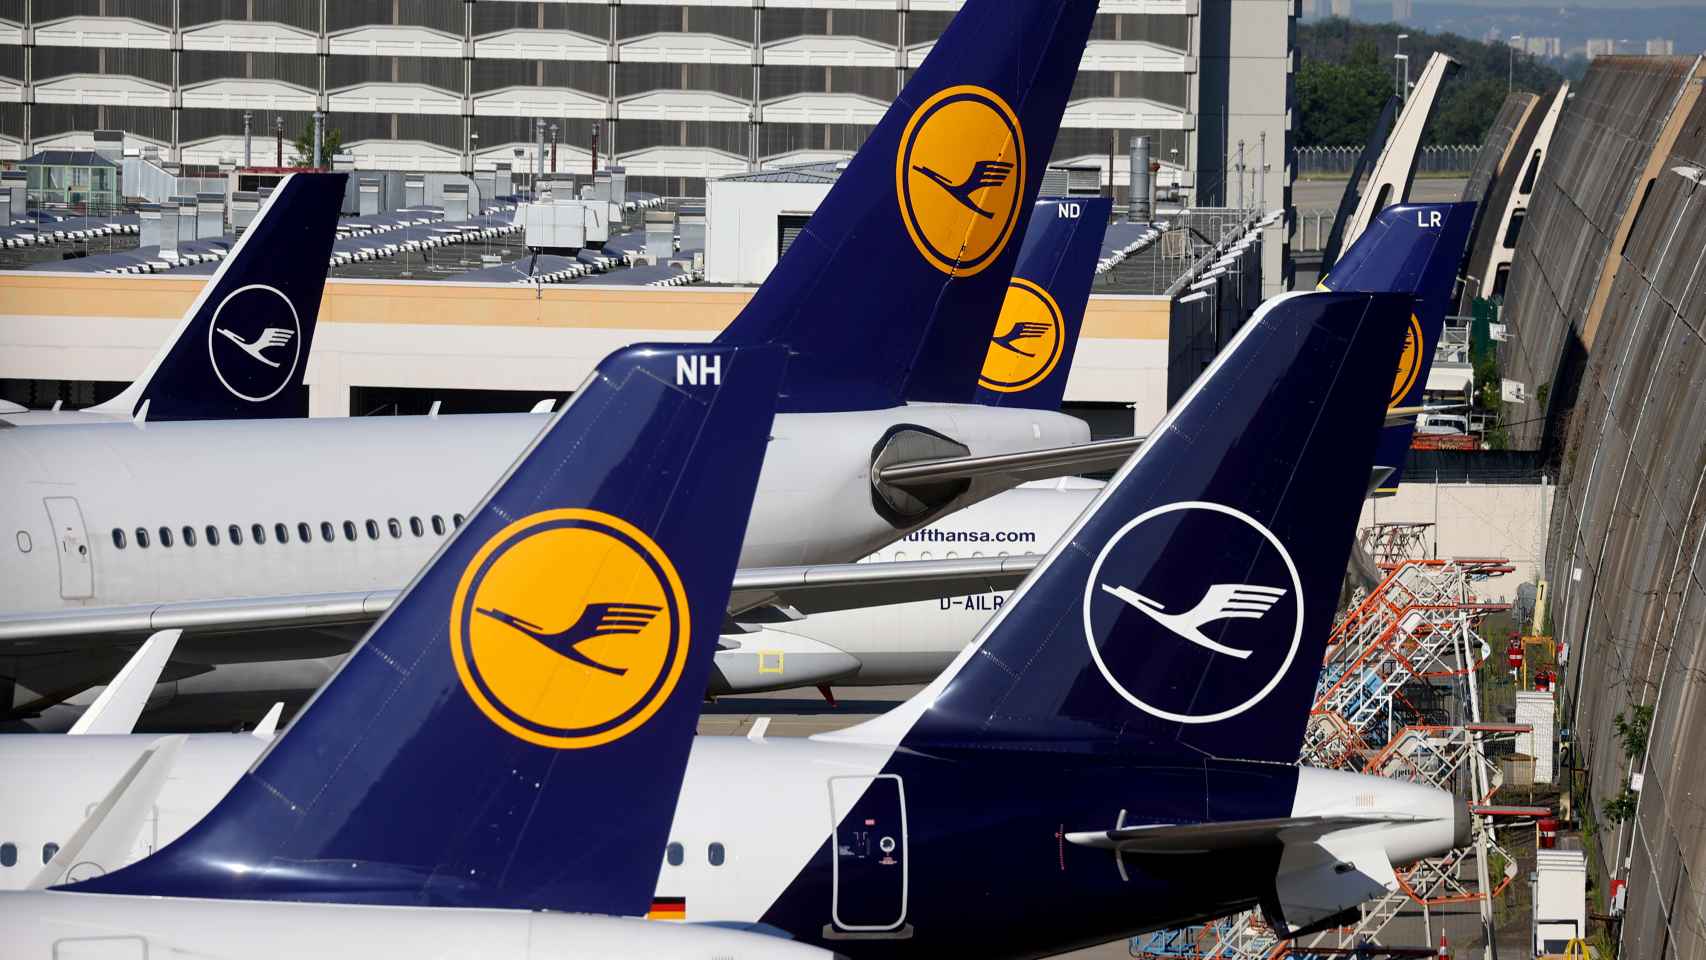 Imagen de aviones de Lufthansa.